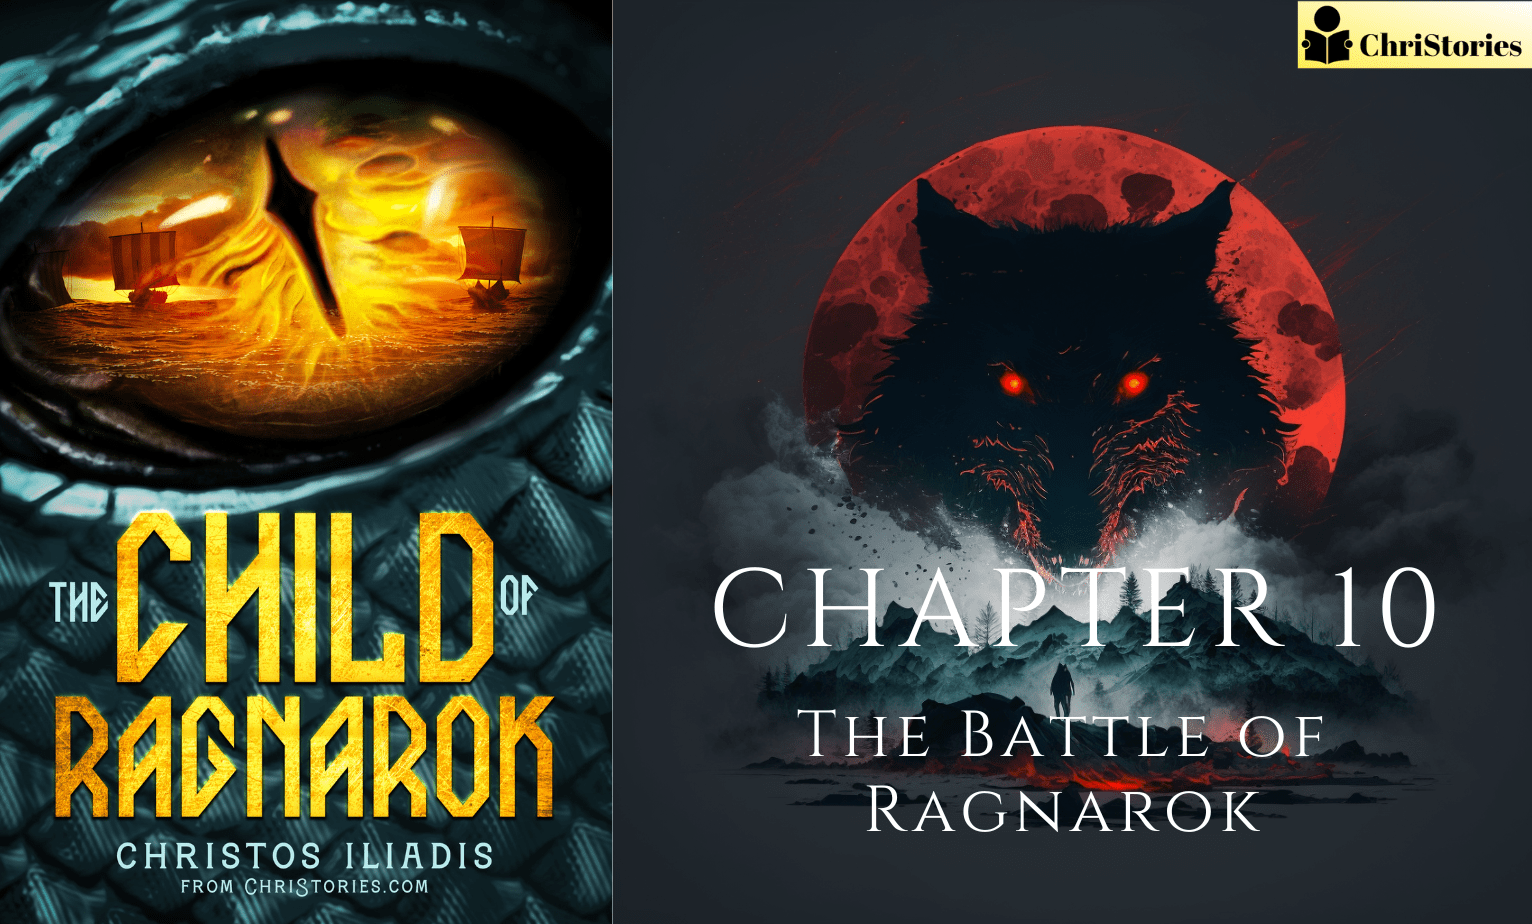 Ragnarok: The Ultimate Battle Between Gods and Giants